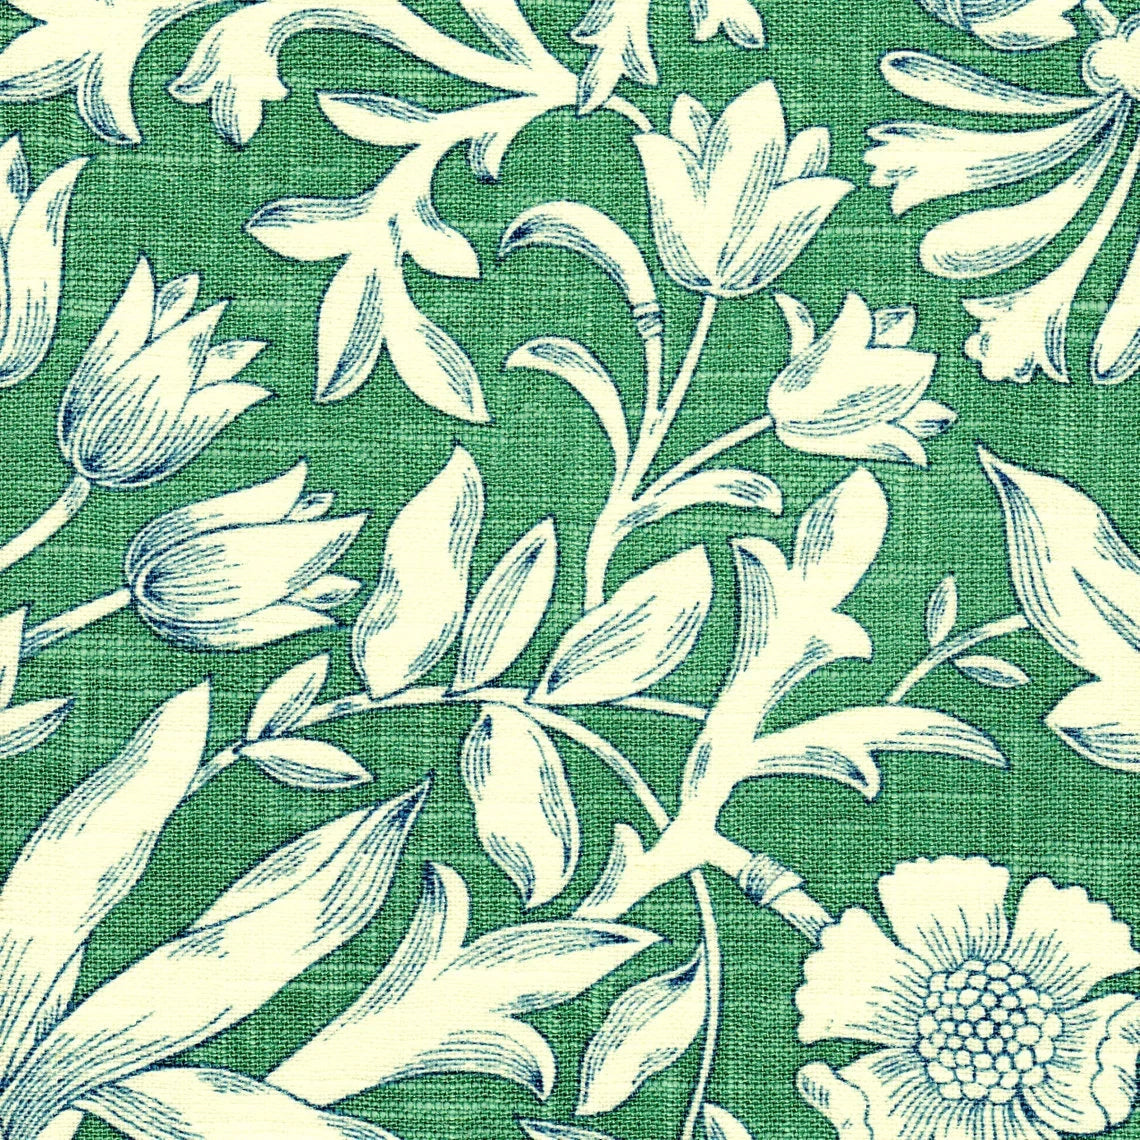 pinch pleated curtain panels pair in flourish verdura green floral damask